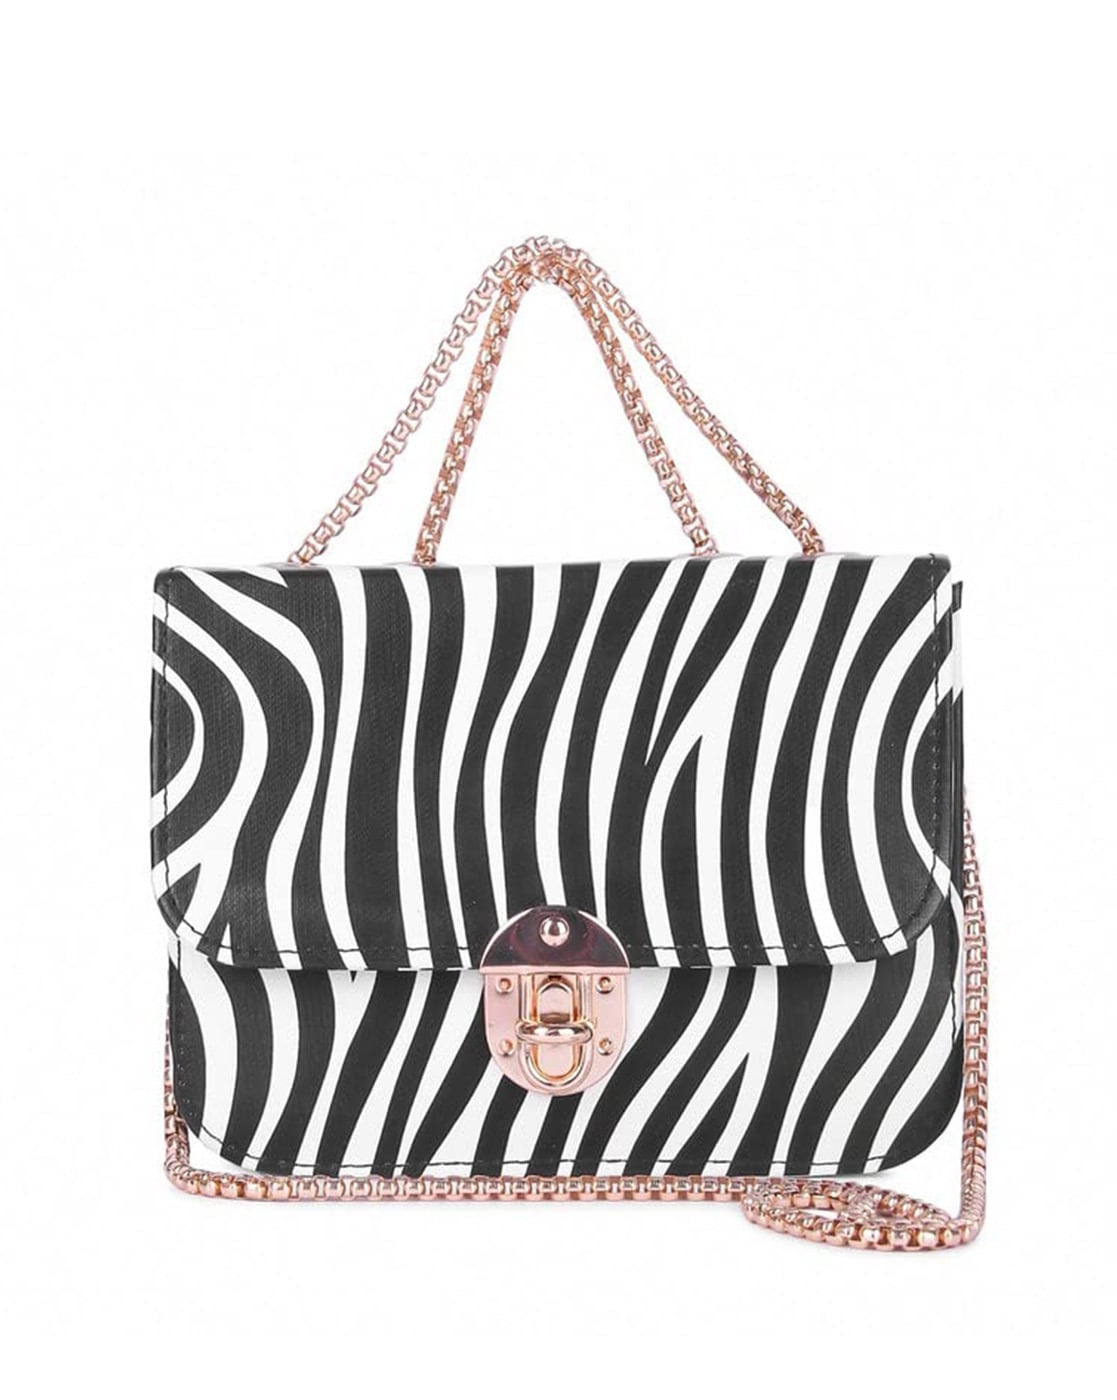 Zebra Striped Tote, Bags: Olive & Cocoa, LLC